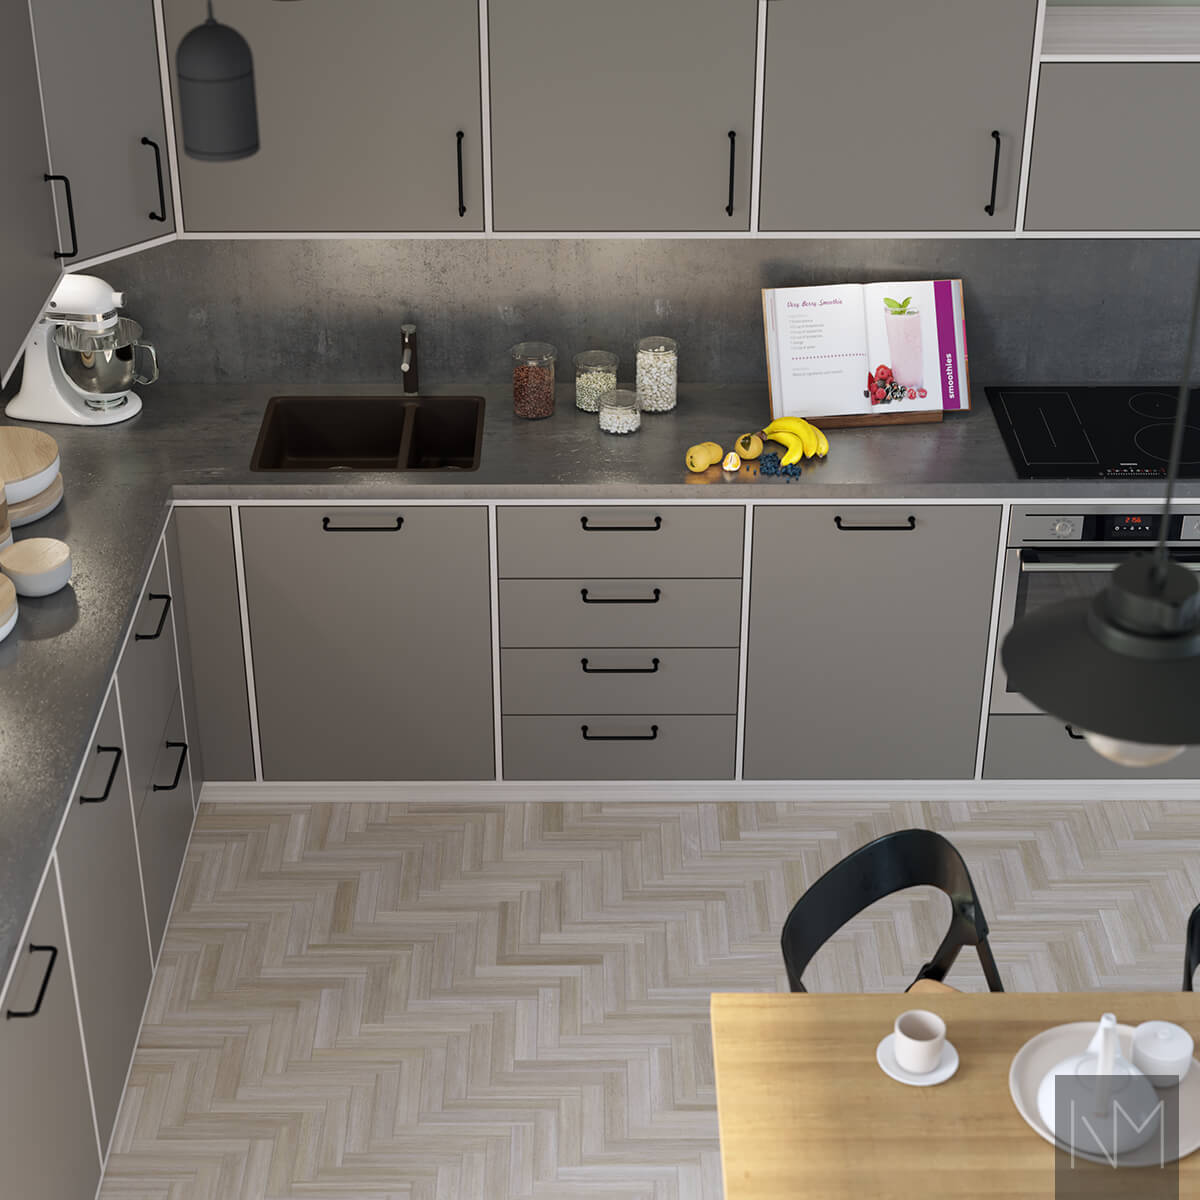 Basic design for kitchen cabinets. Farge SOBER 10249. Sidepaneler i Nordic white-stained ash. Castle-håndtak i svart.